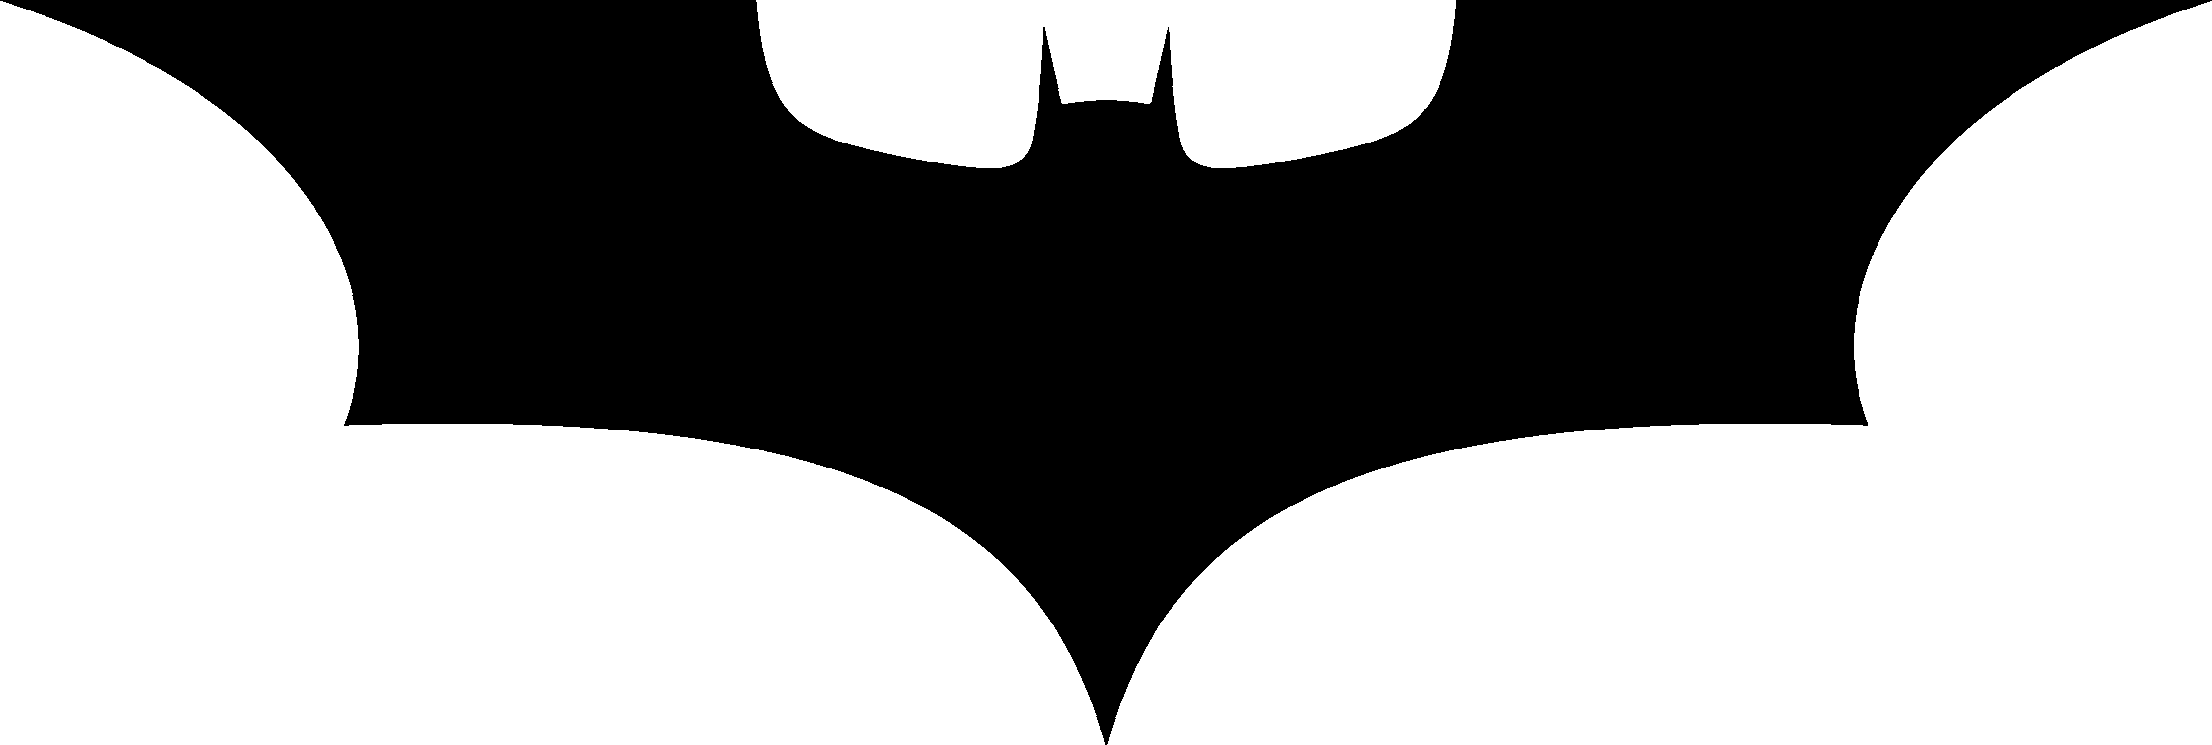 Batman Symbol Clipart | Free download on ClipArtMag